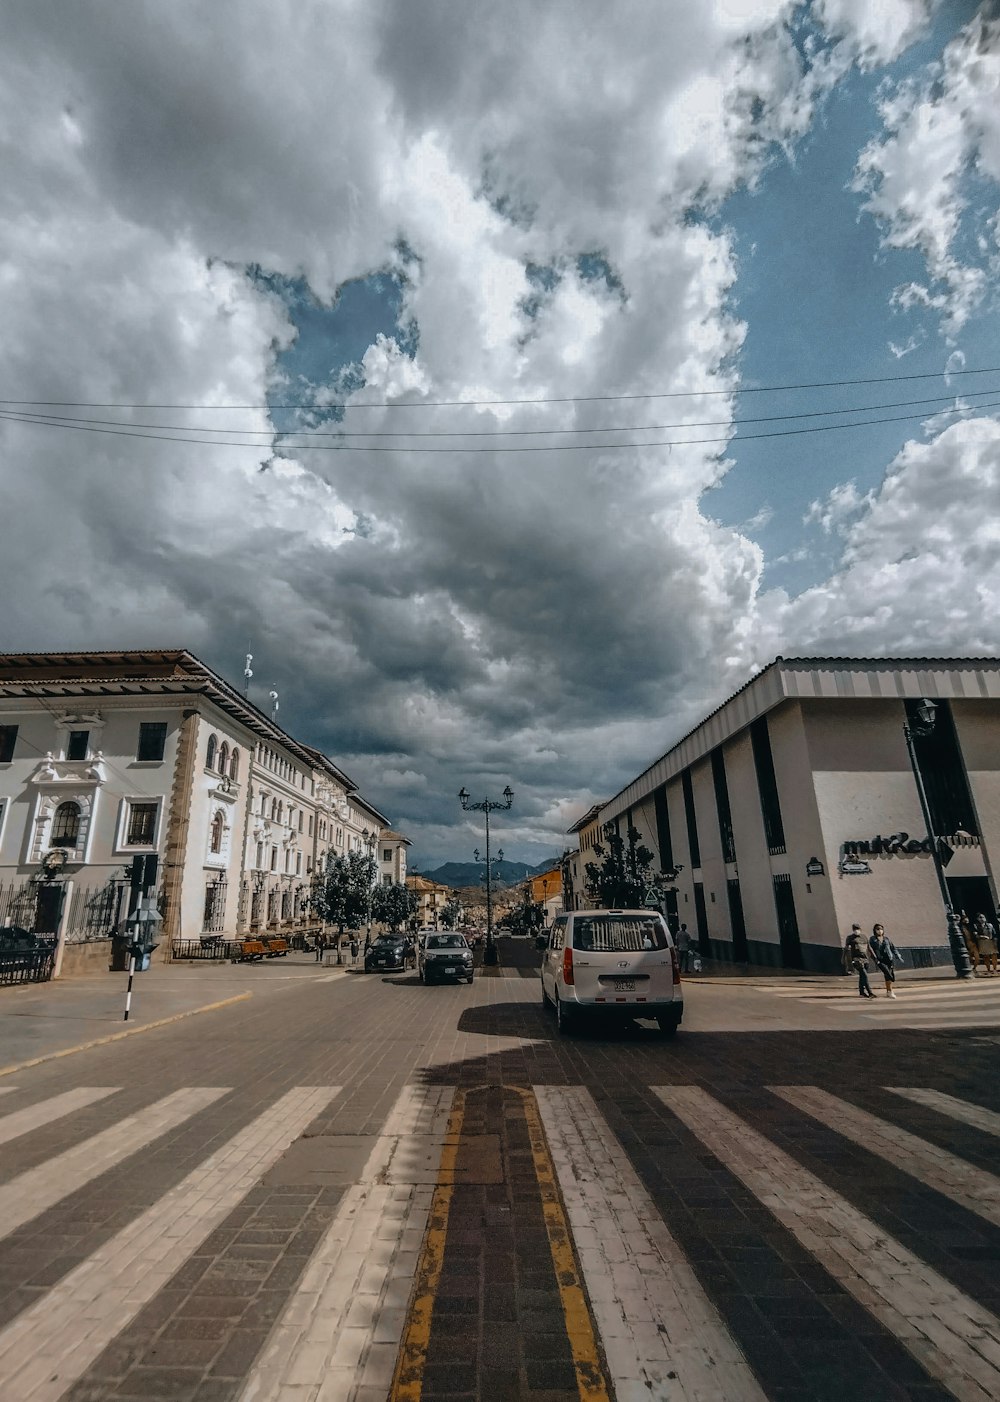 a cloudy sky is seen over a city street